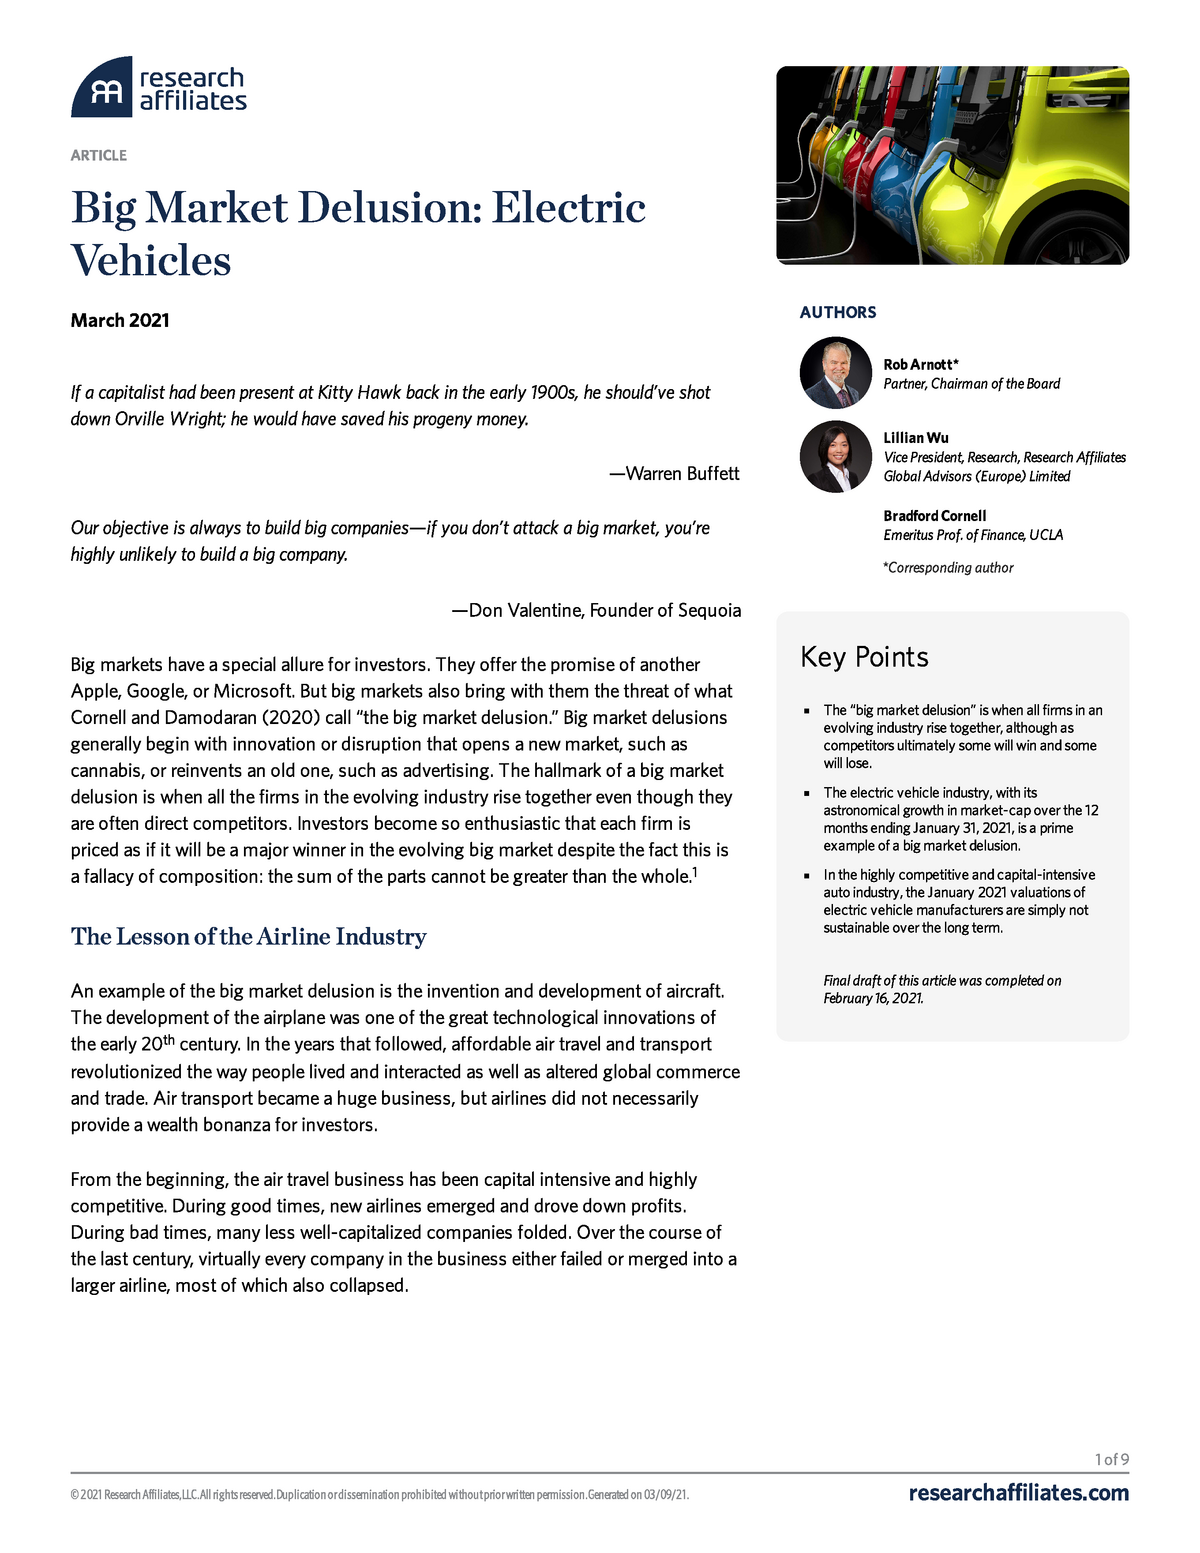 826 big market delusion electric vehicles 1 of 9 AUTHORS Rob Arnott